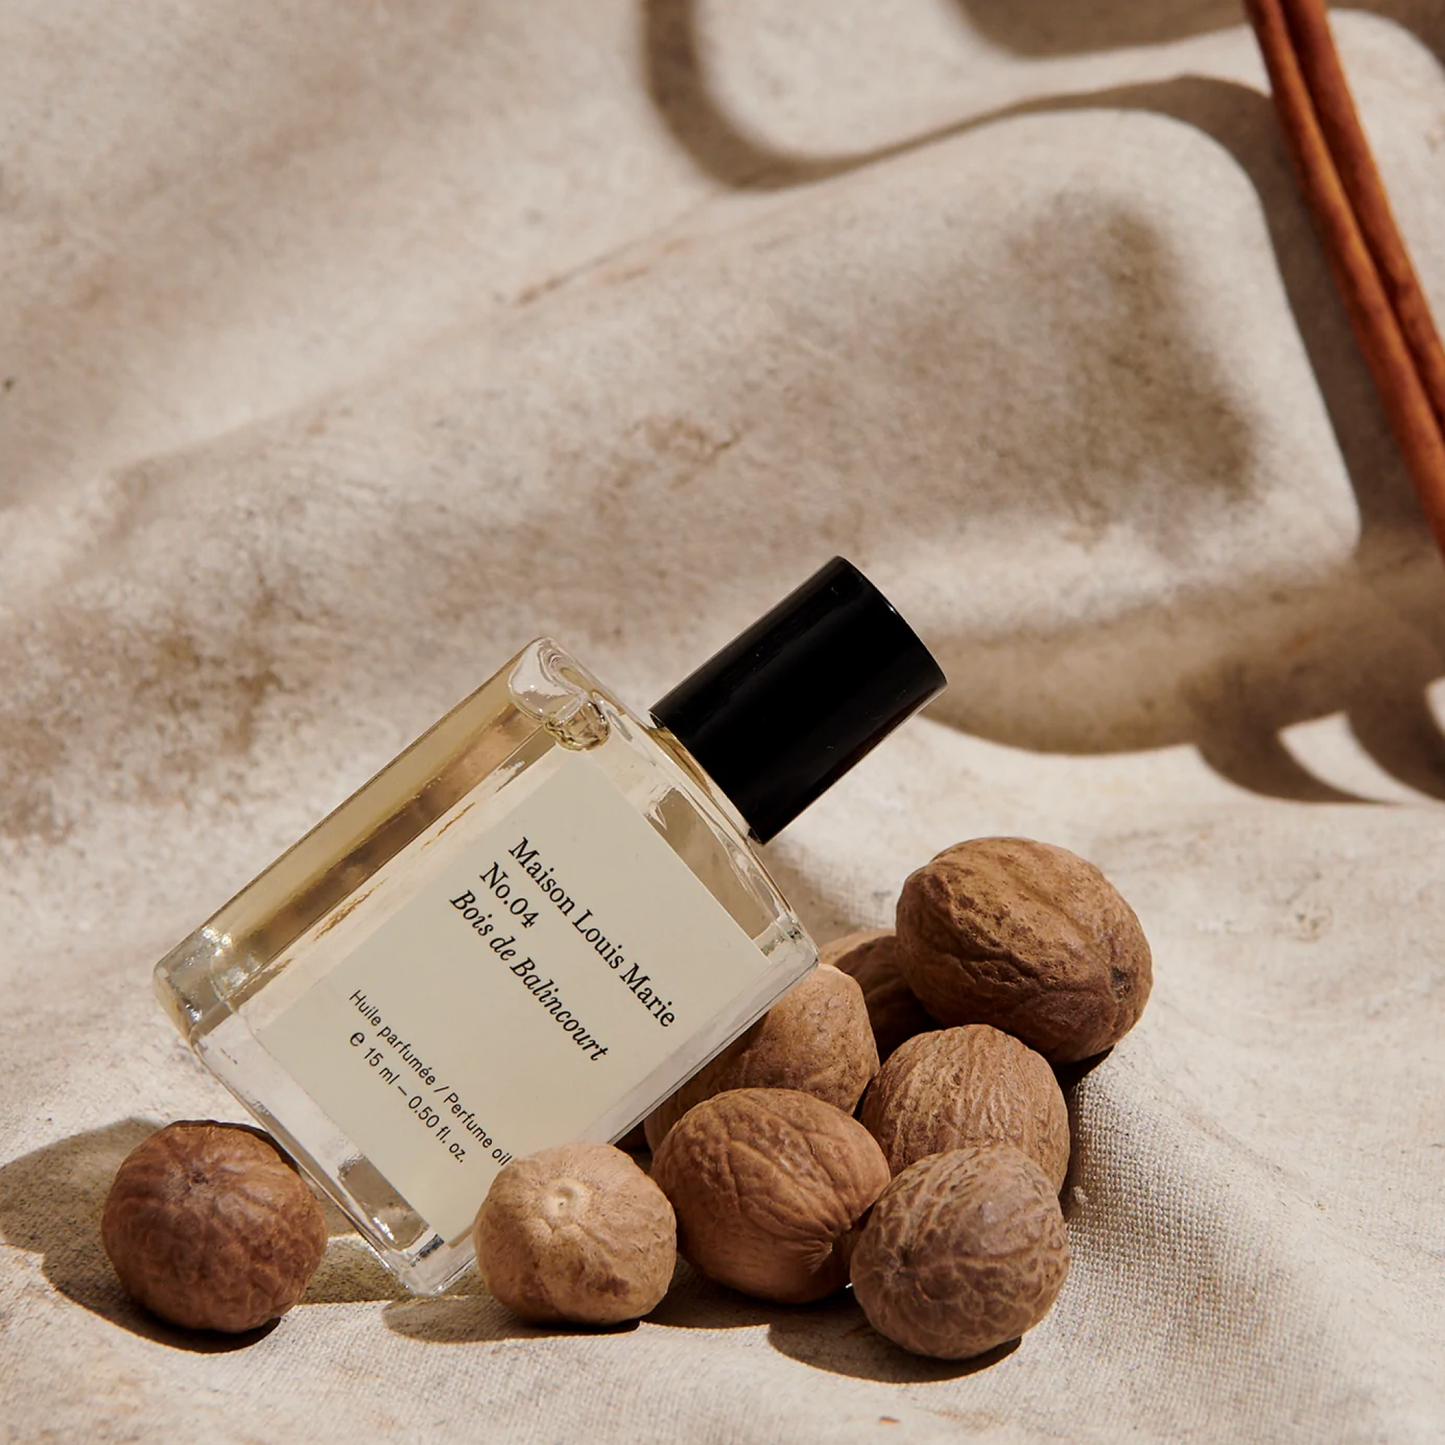 Perfume oil, No. 04 Bois de Balincourt